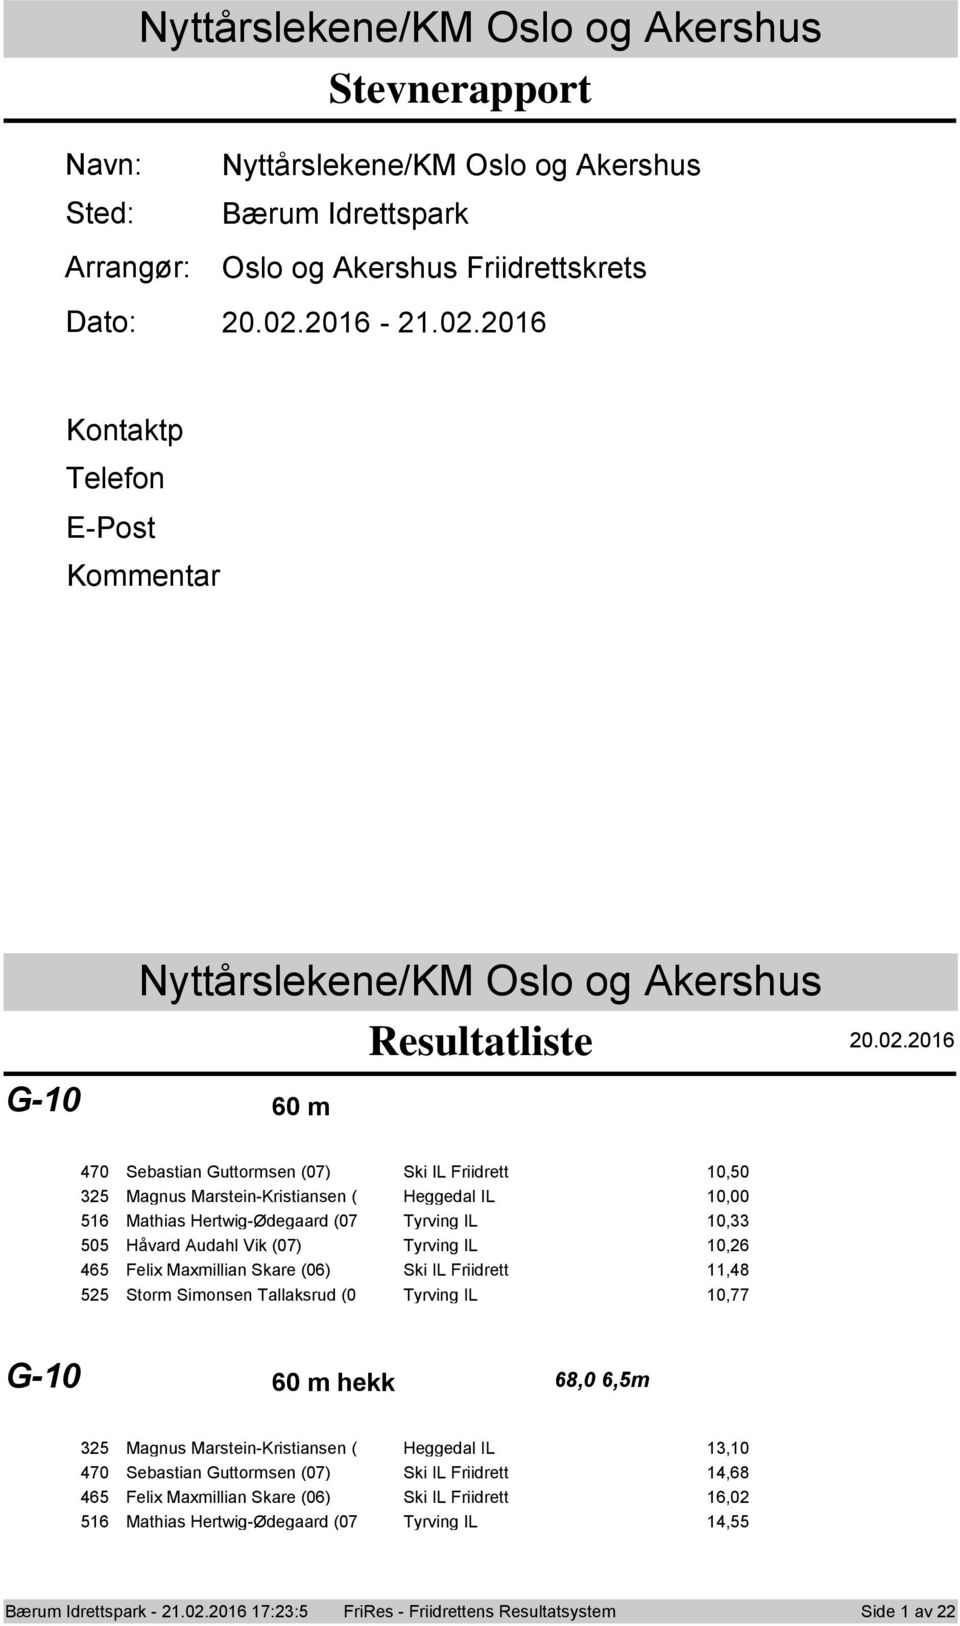 Mathias Hertwig-Ødegaard (0 Tyrving IL 0, 0 Håvard Audahl Vik (0) Tyrving IL 0, Felix Maxmillian Skare (0) Ski IL Friidrett, Strm Simnsen Tallaksrud (0 Tyrving IL 0, G-0 0 m hekk,0,m Magnus